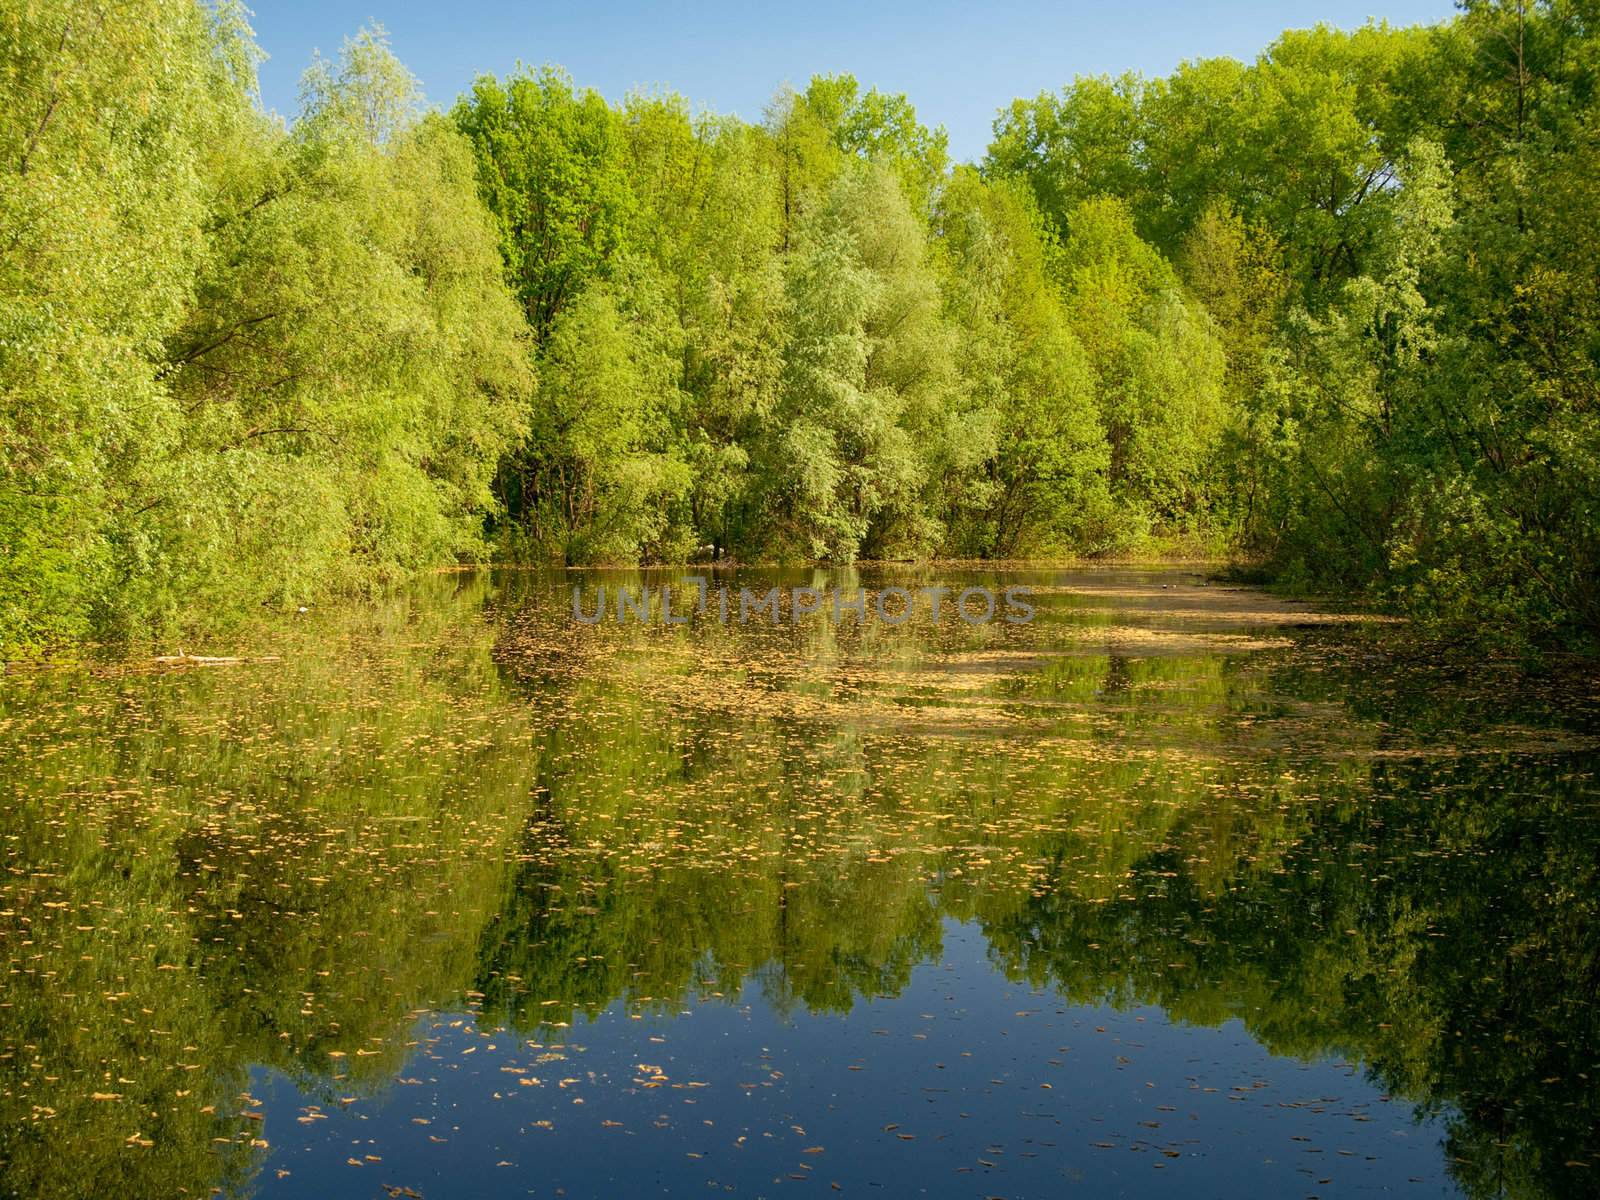 Pond in an old park in springtime